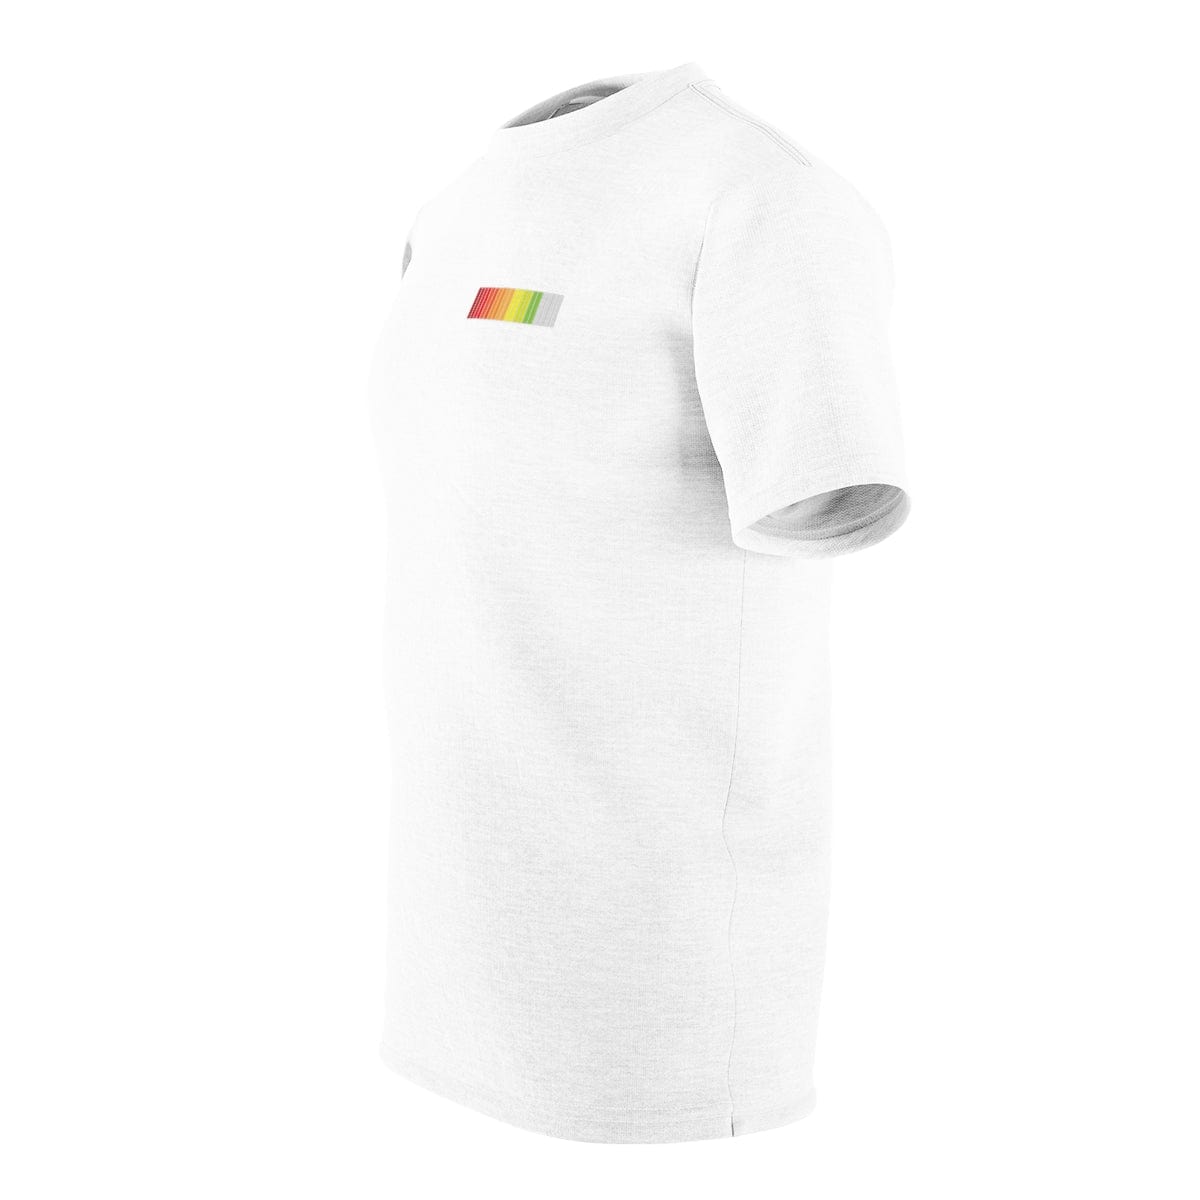 The All Premium Life Bar White Unisex Cut & Sew T -Shirt